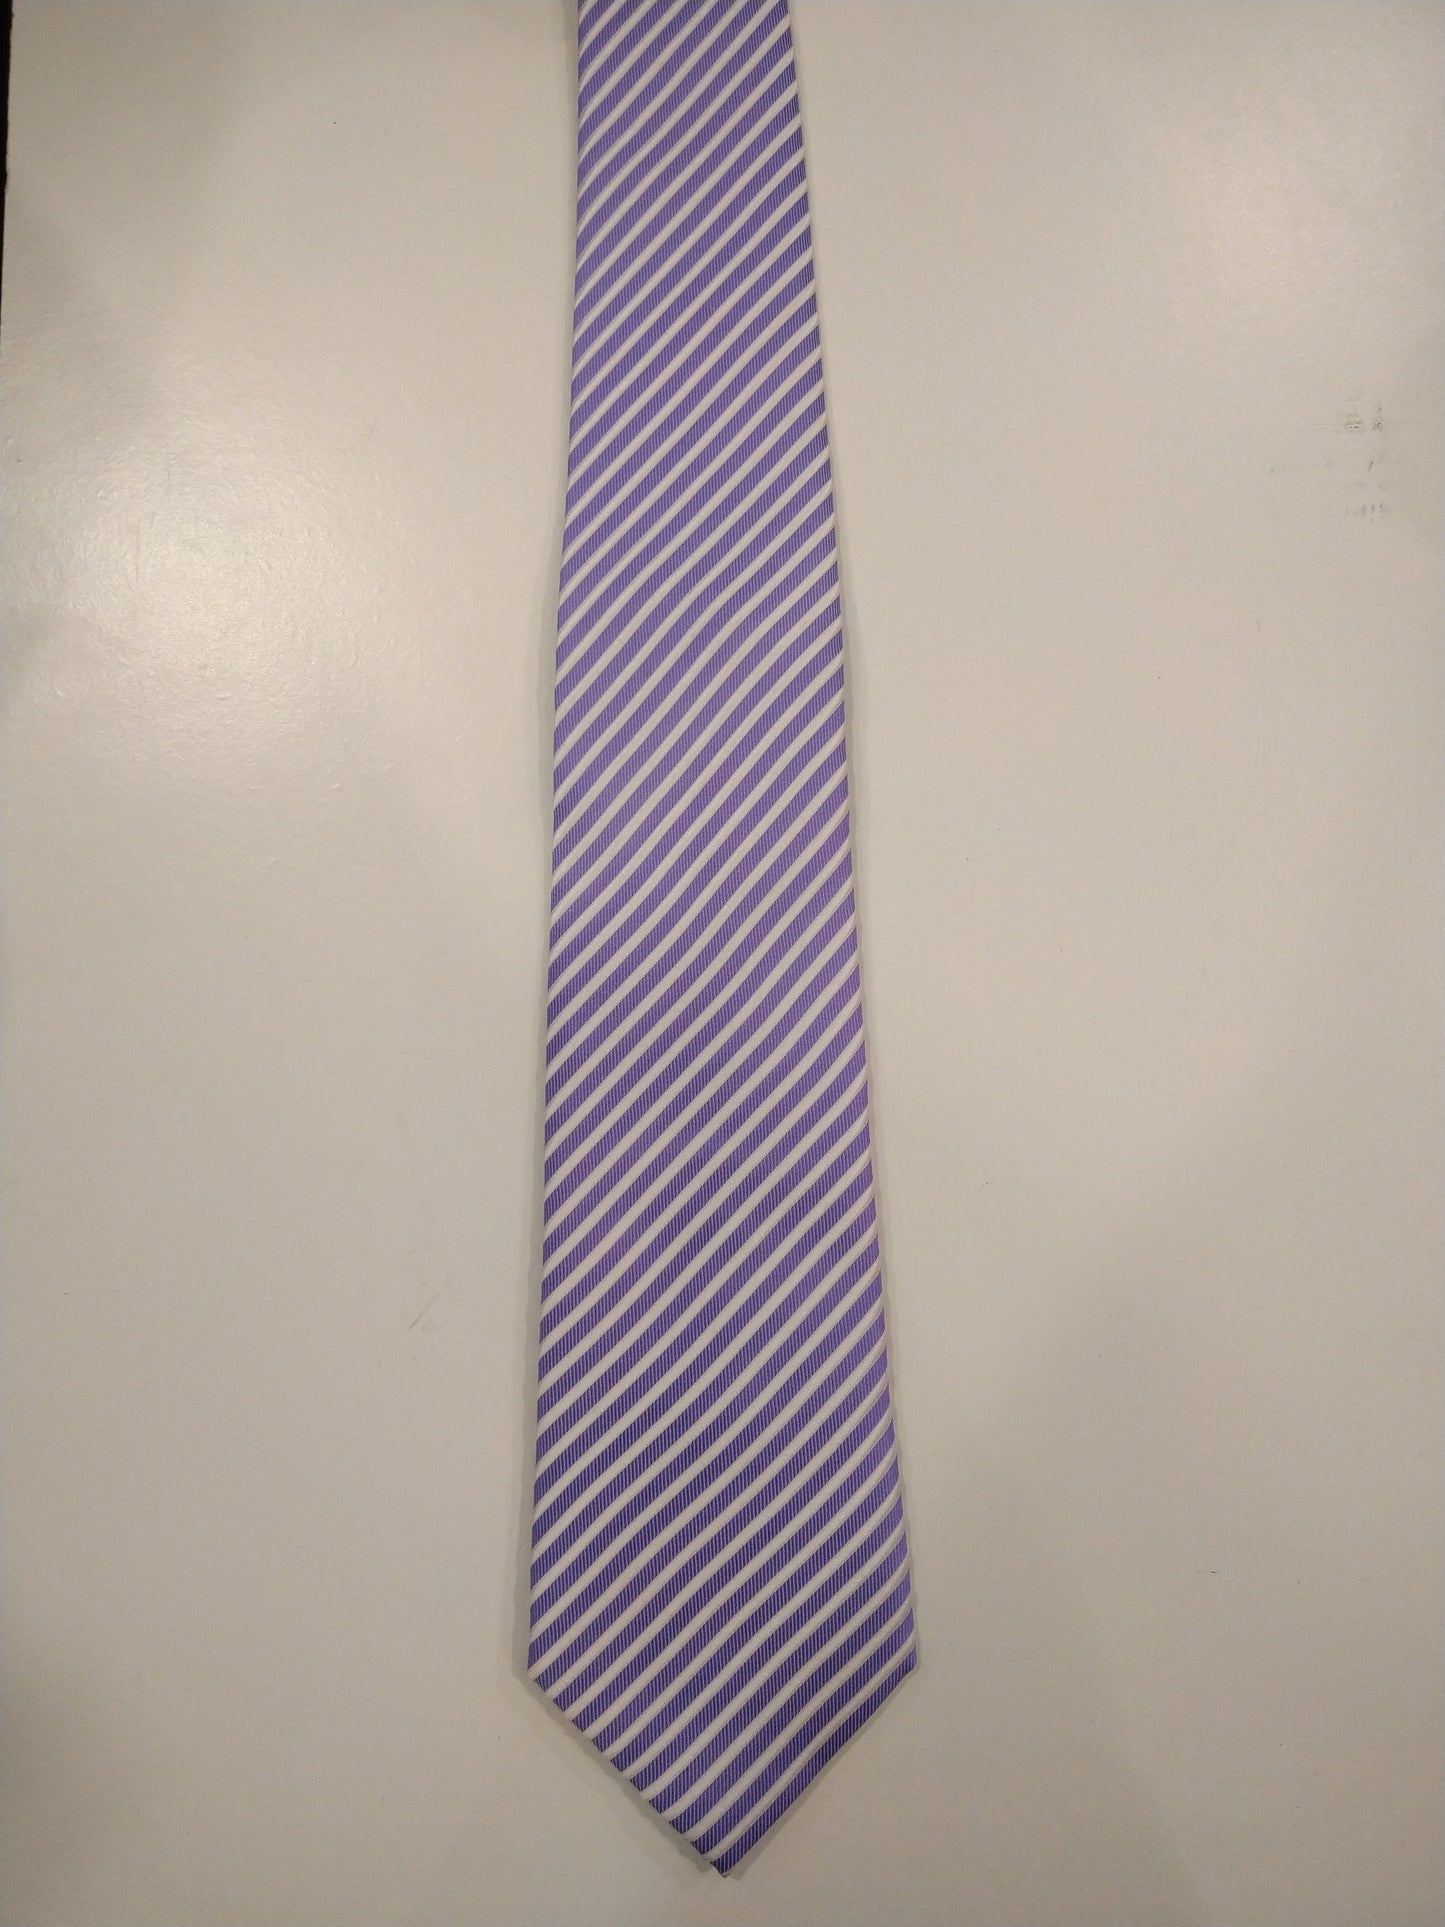 Savoy Taylors Guild silk tie. Purple white striped.